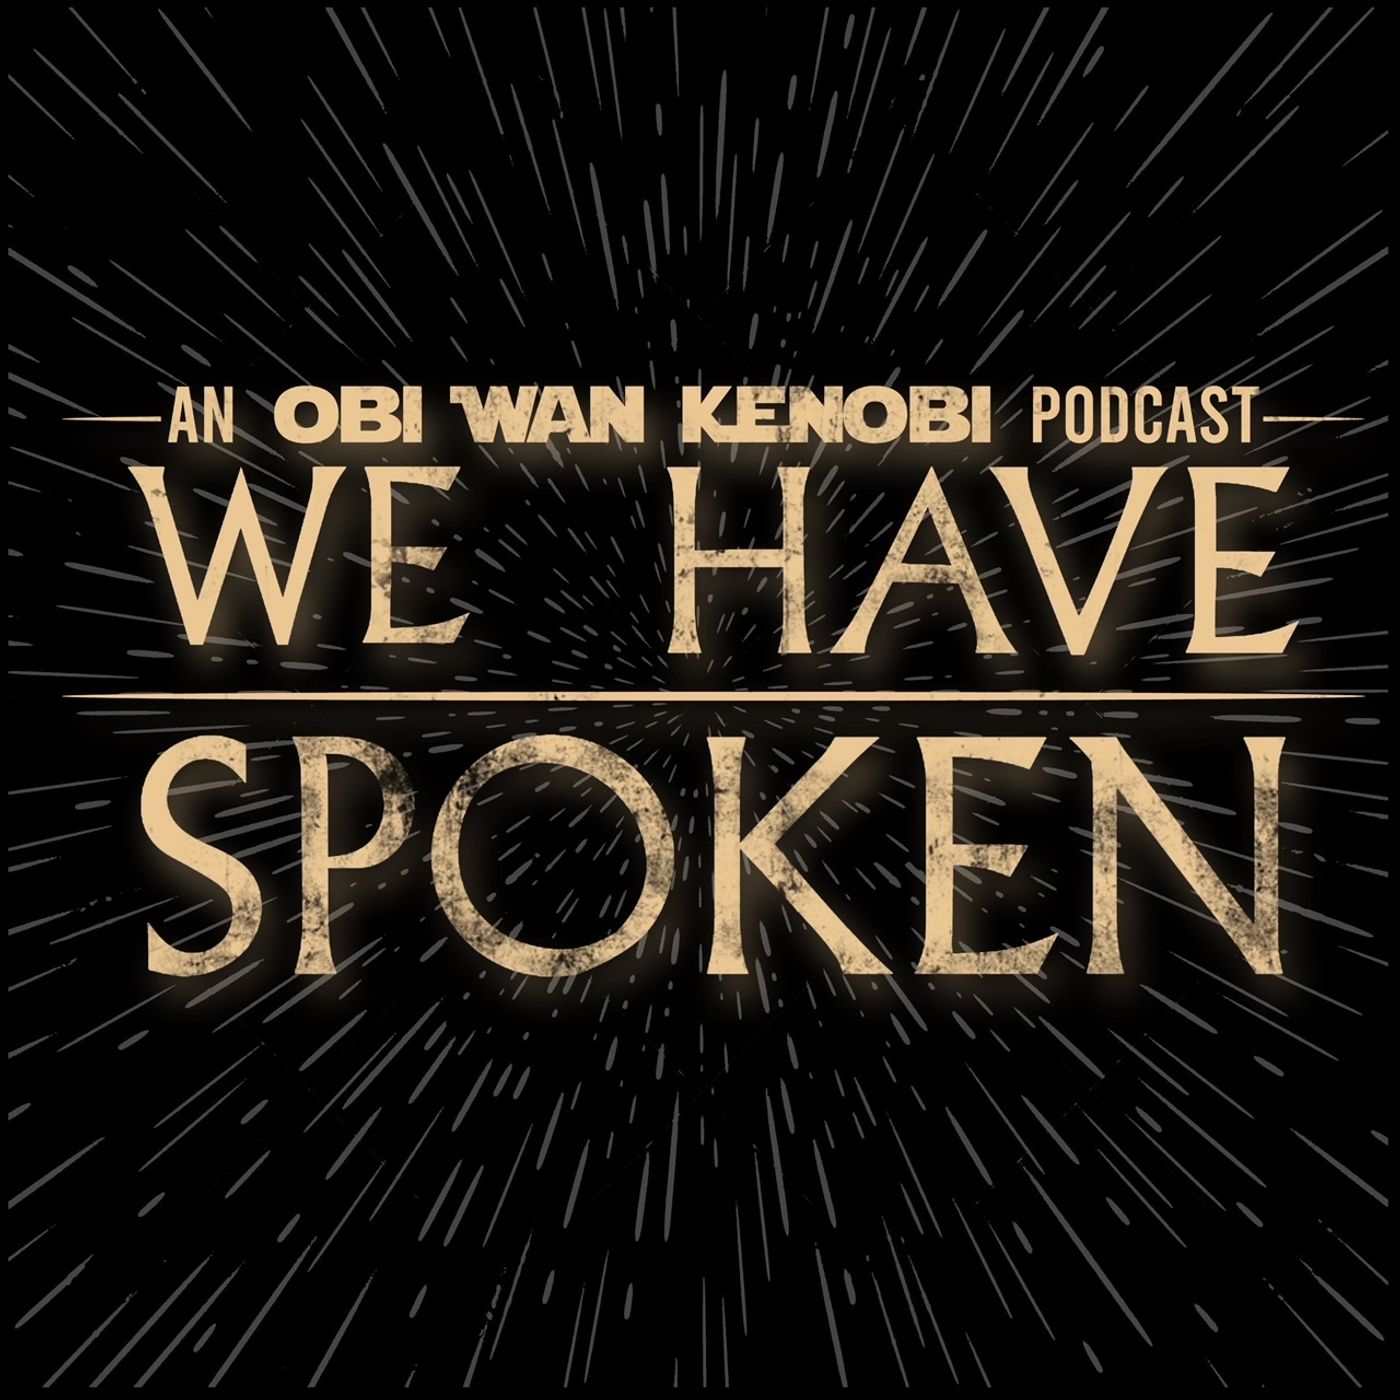 Obi-Wan Kenobi Parts 1 & 2